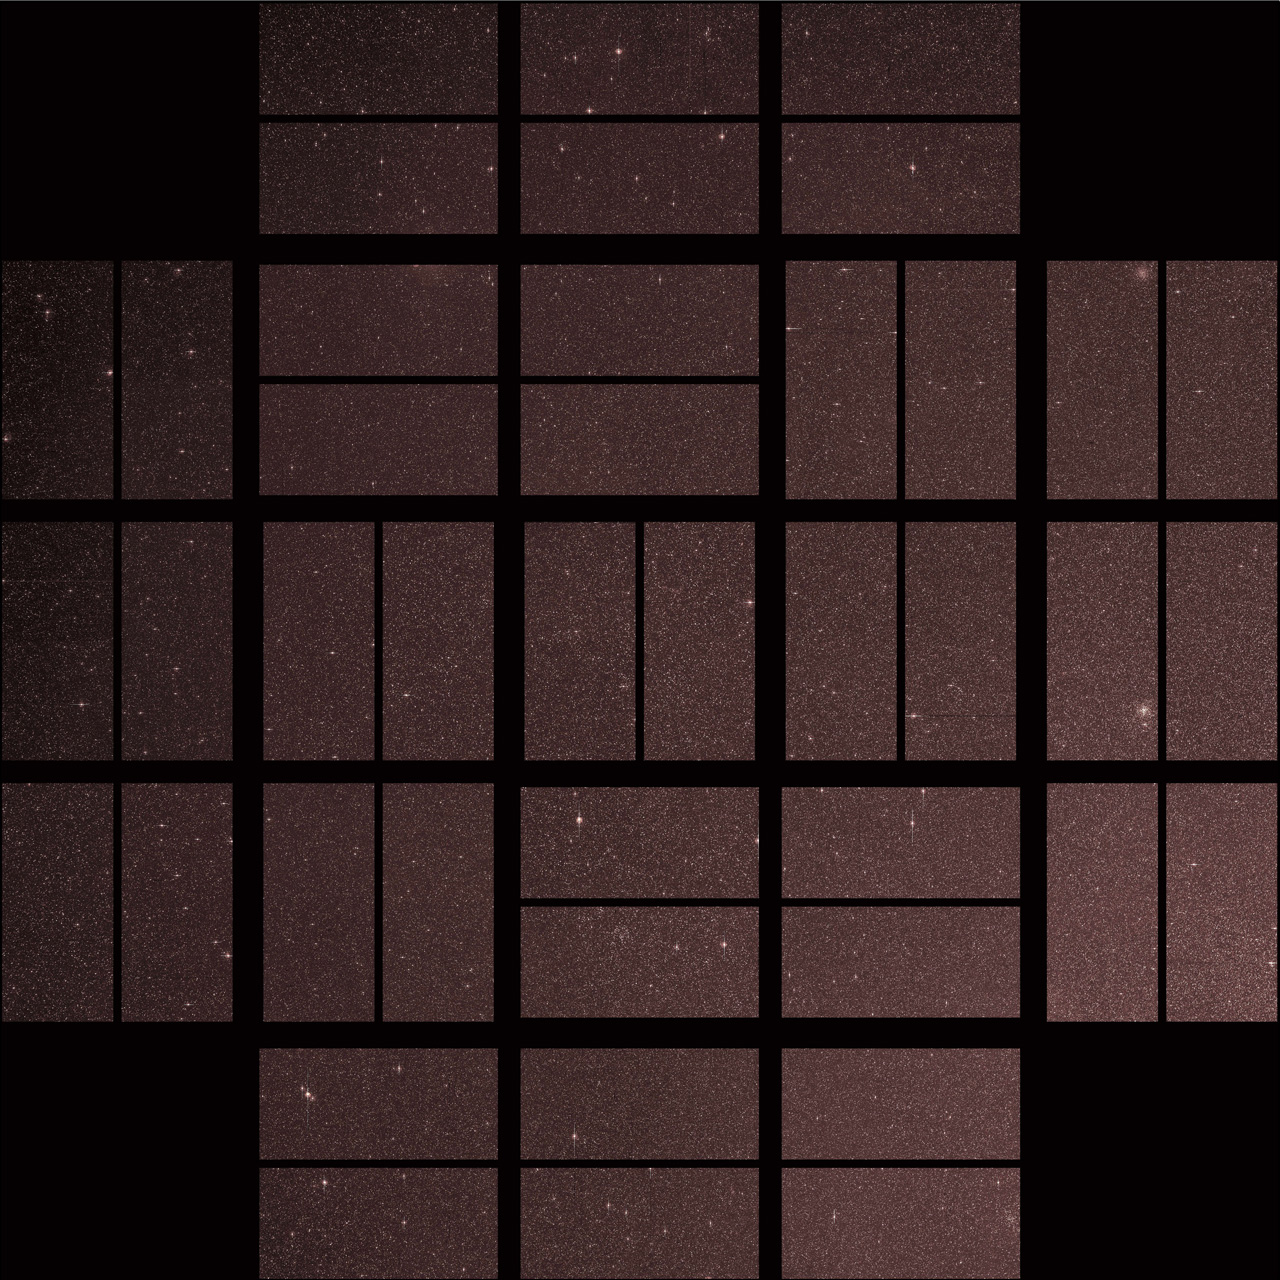 Grid view of billions of stars.